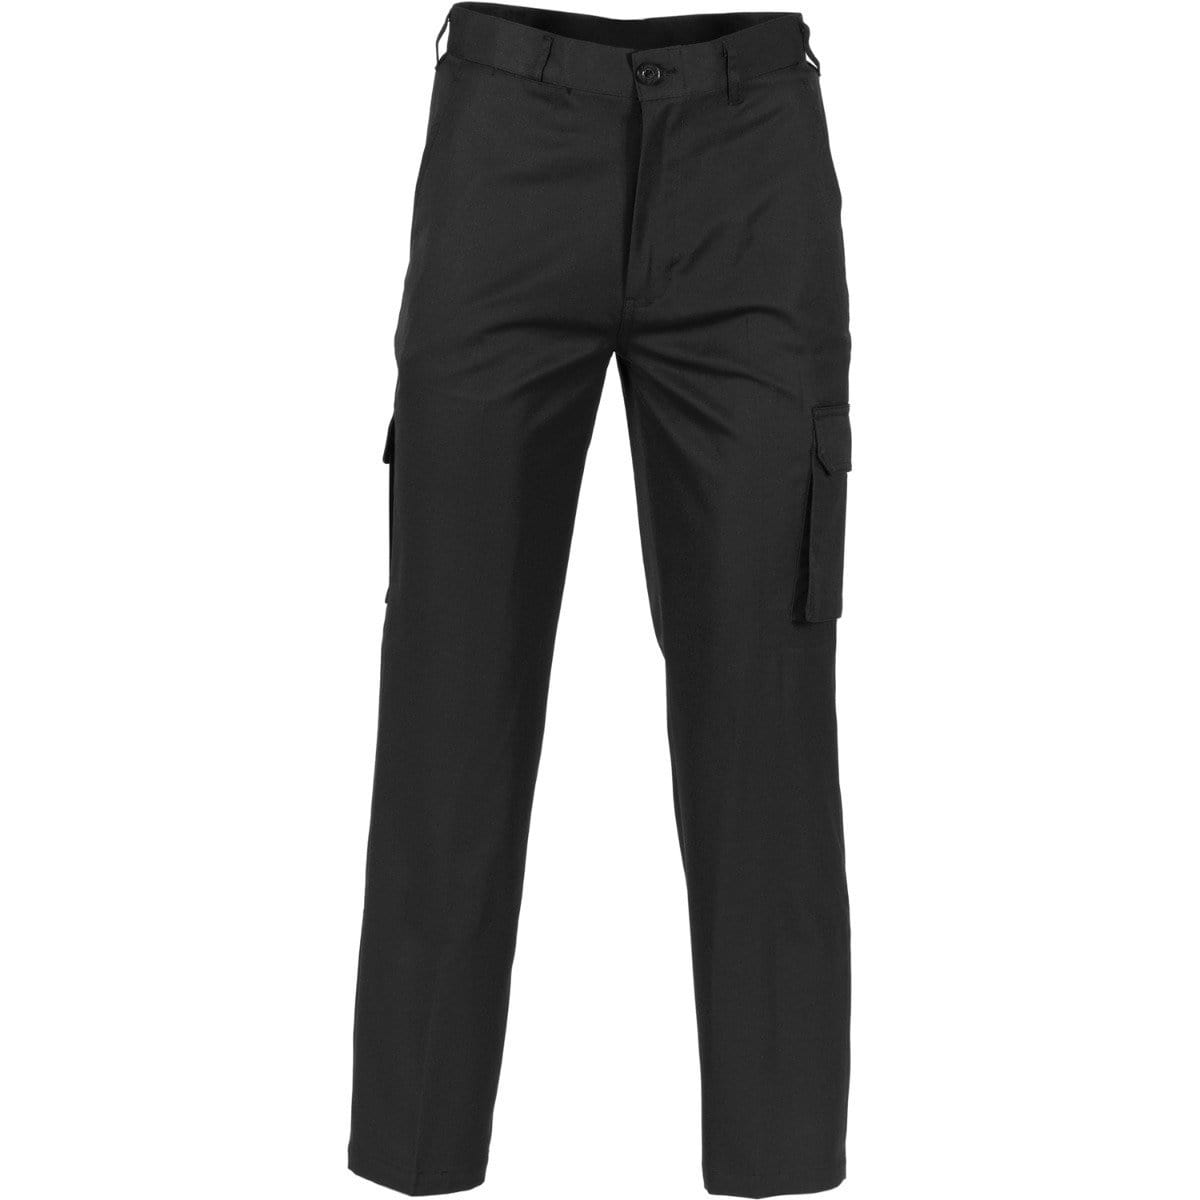 Dnc Workwear Permanent Press Cargo Pants - 4504 Work Wear DNC Workwear Black 72R 